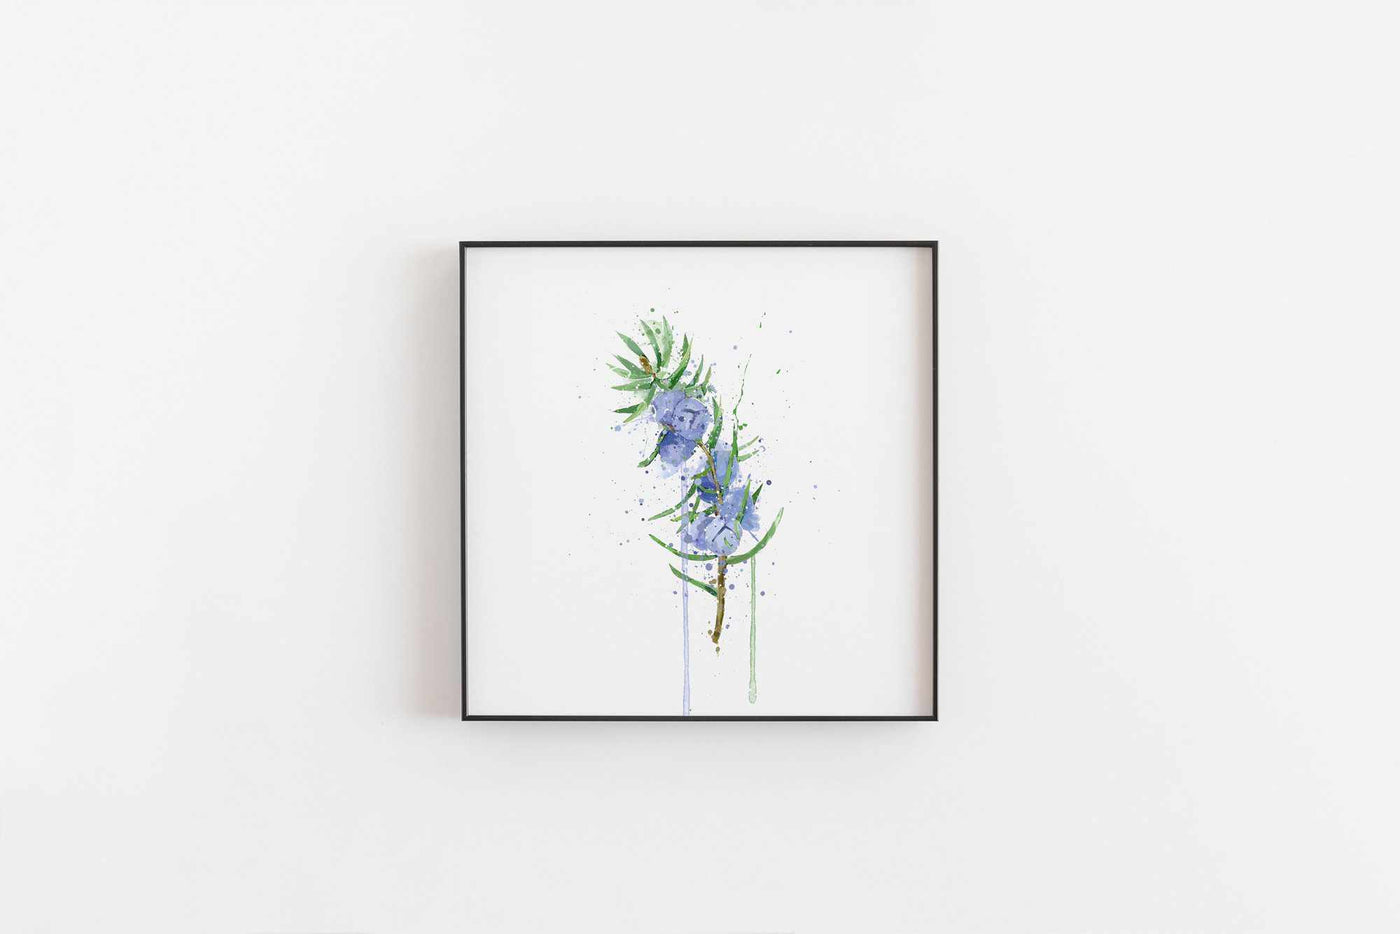 Botanical Wall Art Print ‘Juniper’ - Plant Prints, Botanical Art Prints and Botanical Illustrations